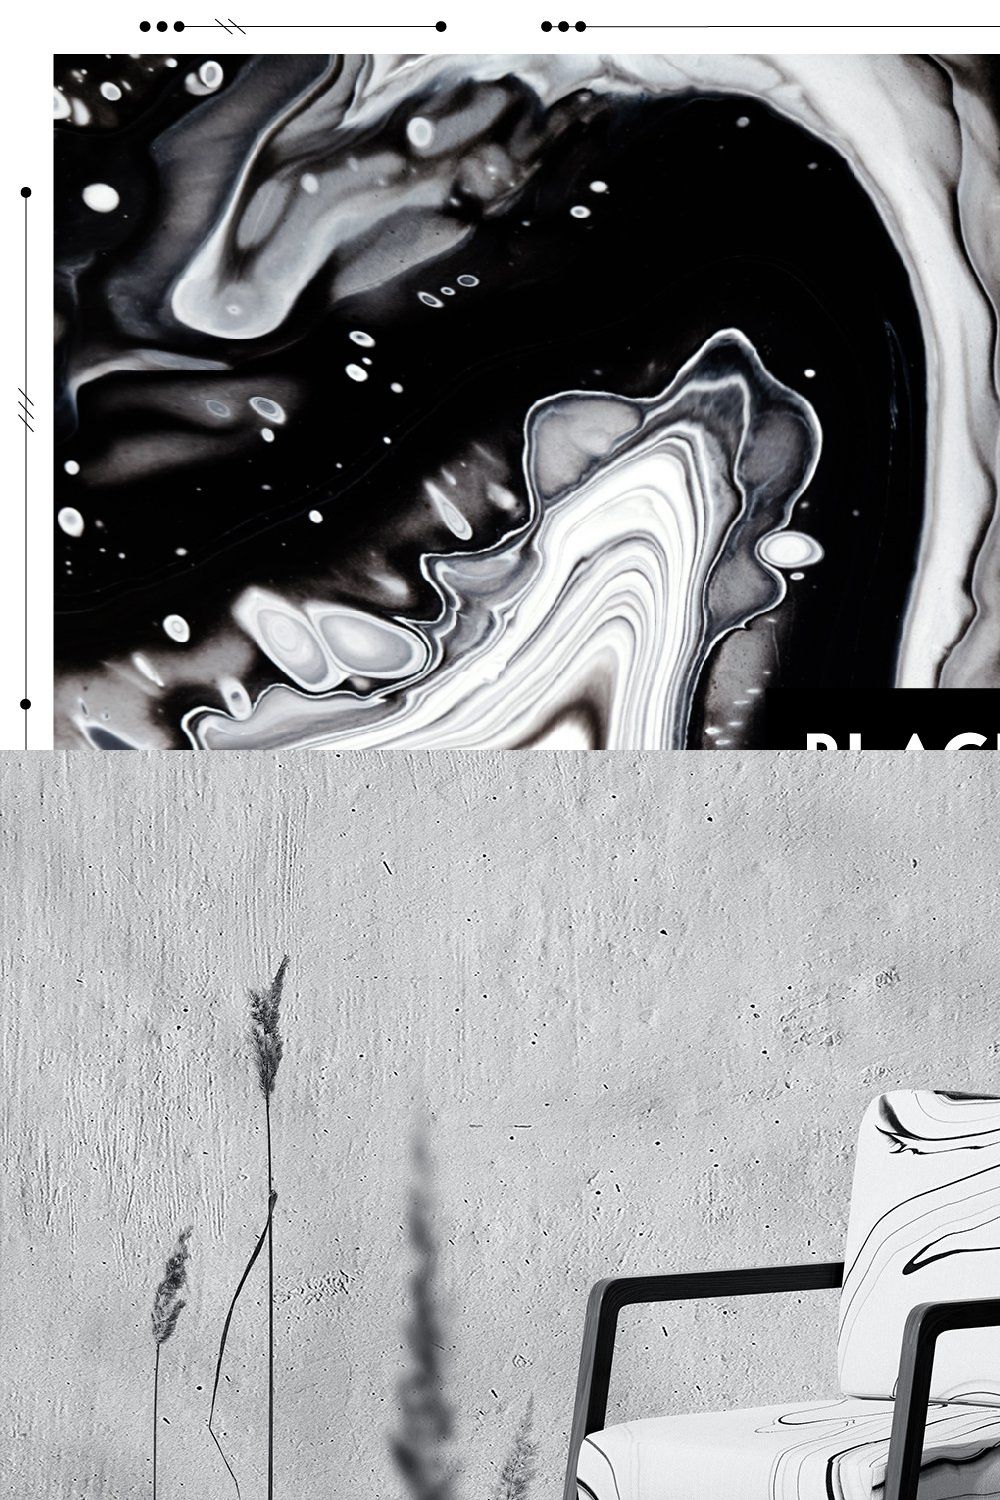 Black & White textures pinterest preview image.